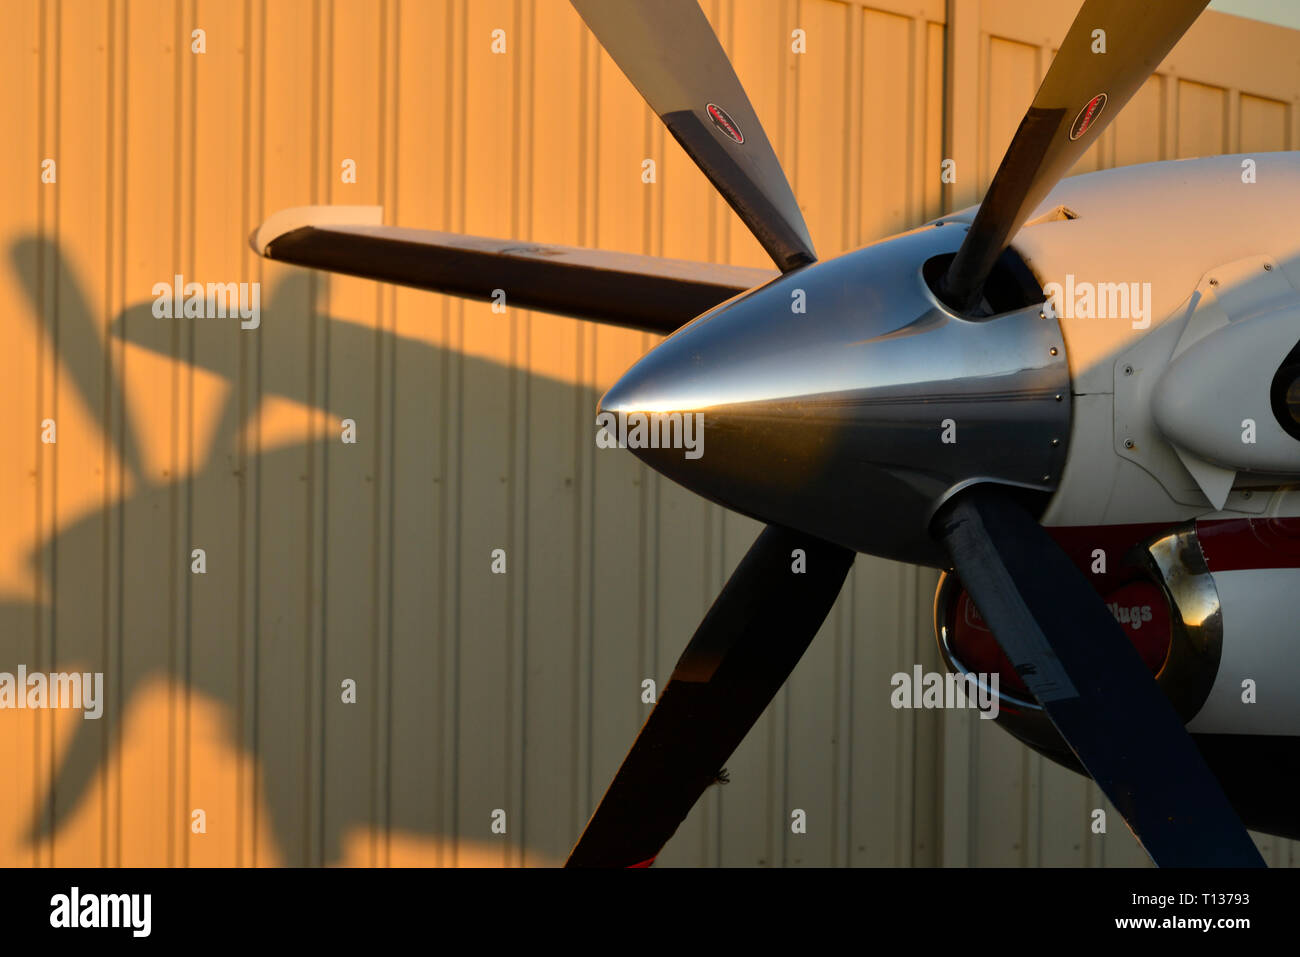 The nose of a Pilatus PC12 outside an aircraft maintenance hangar. Sunlight illuminates the building. Stock Photo